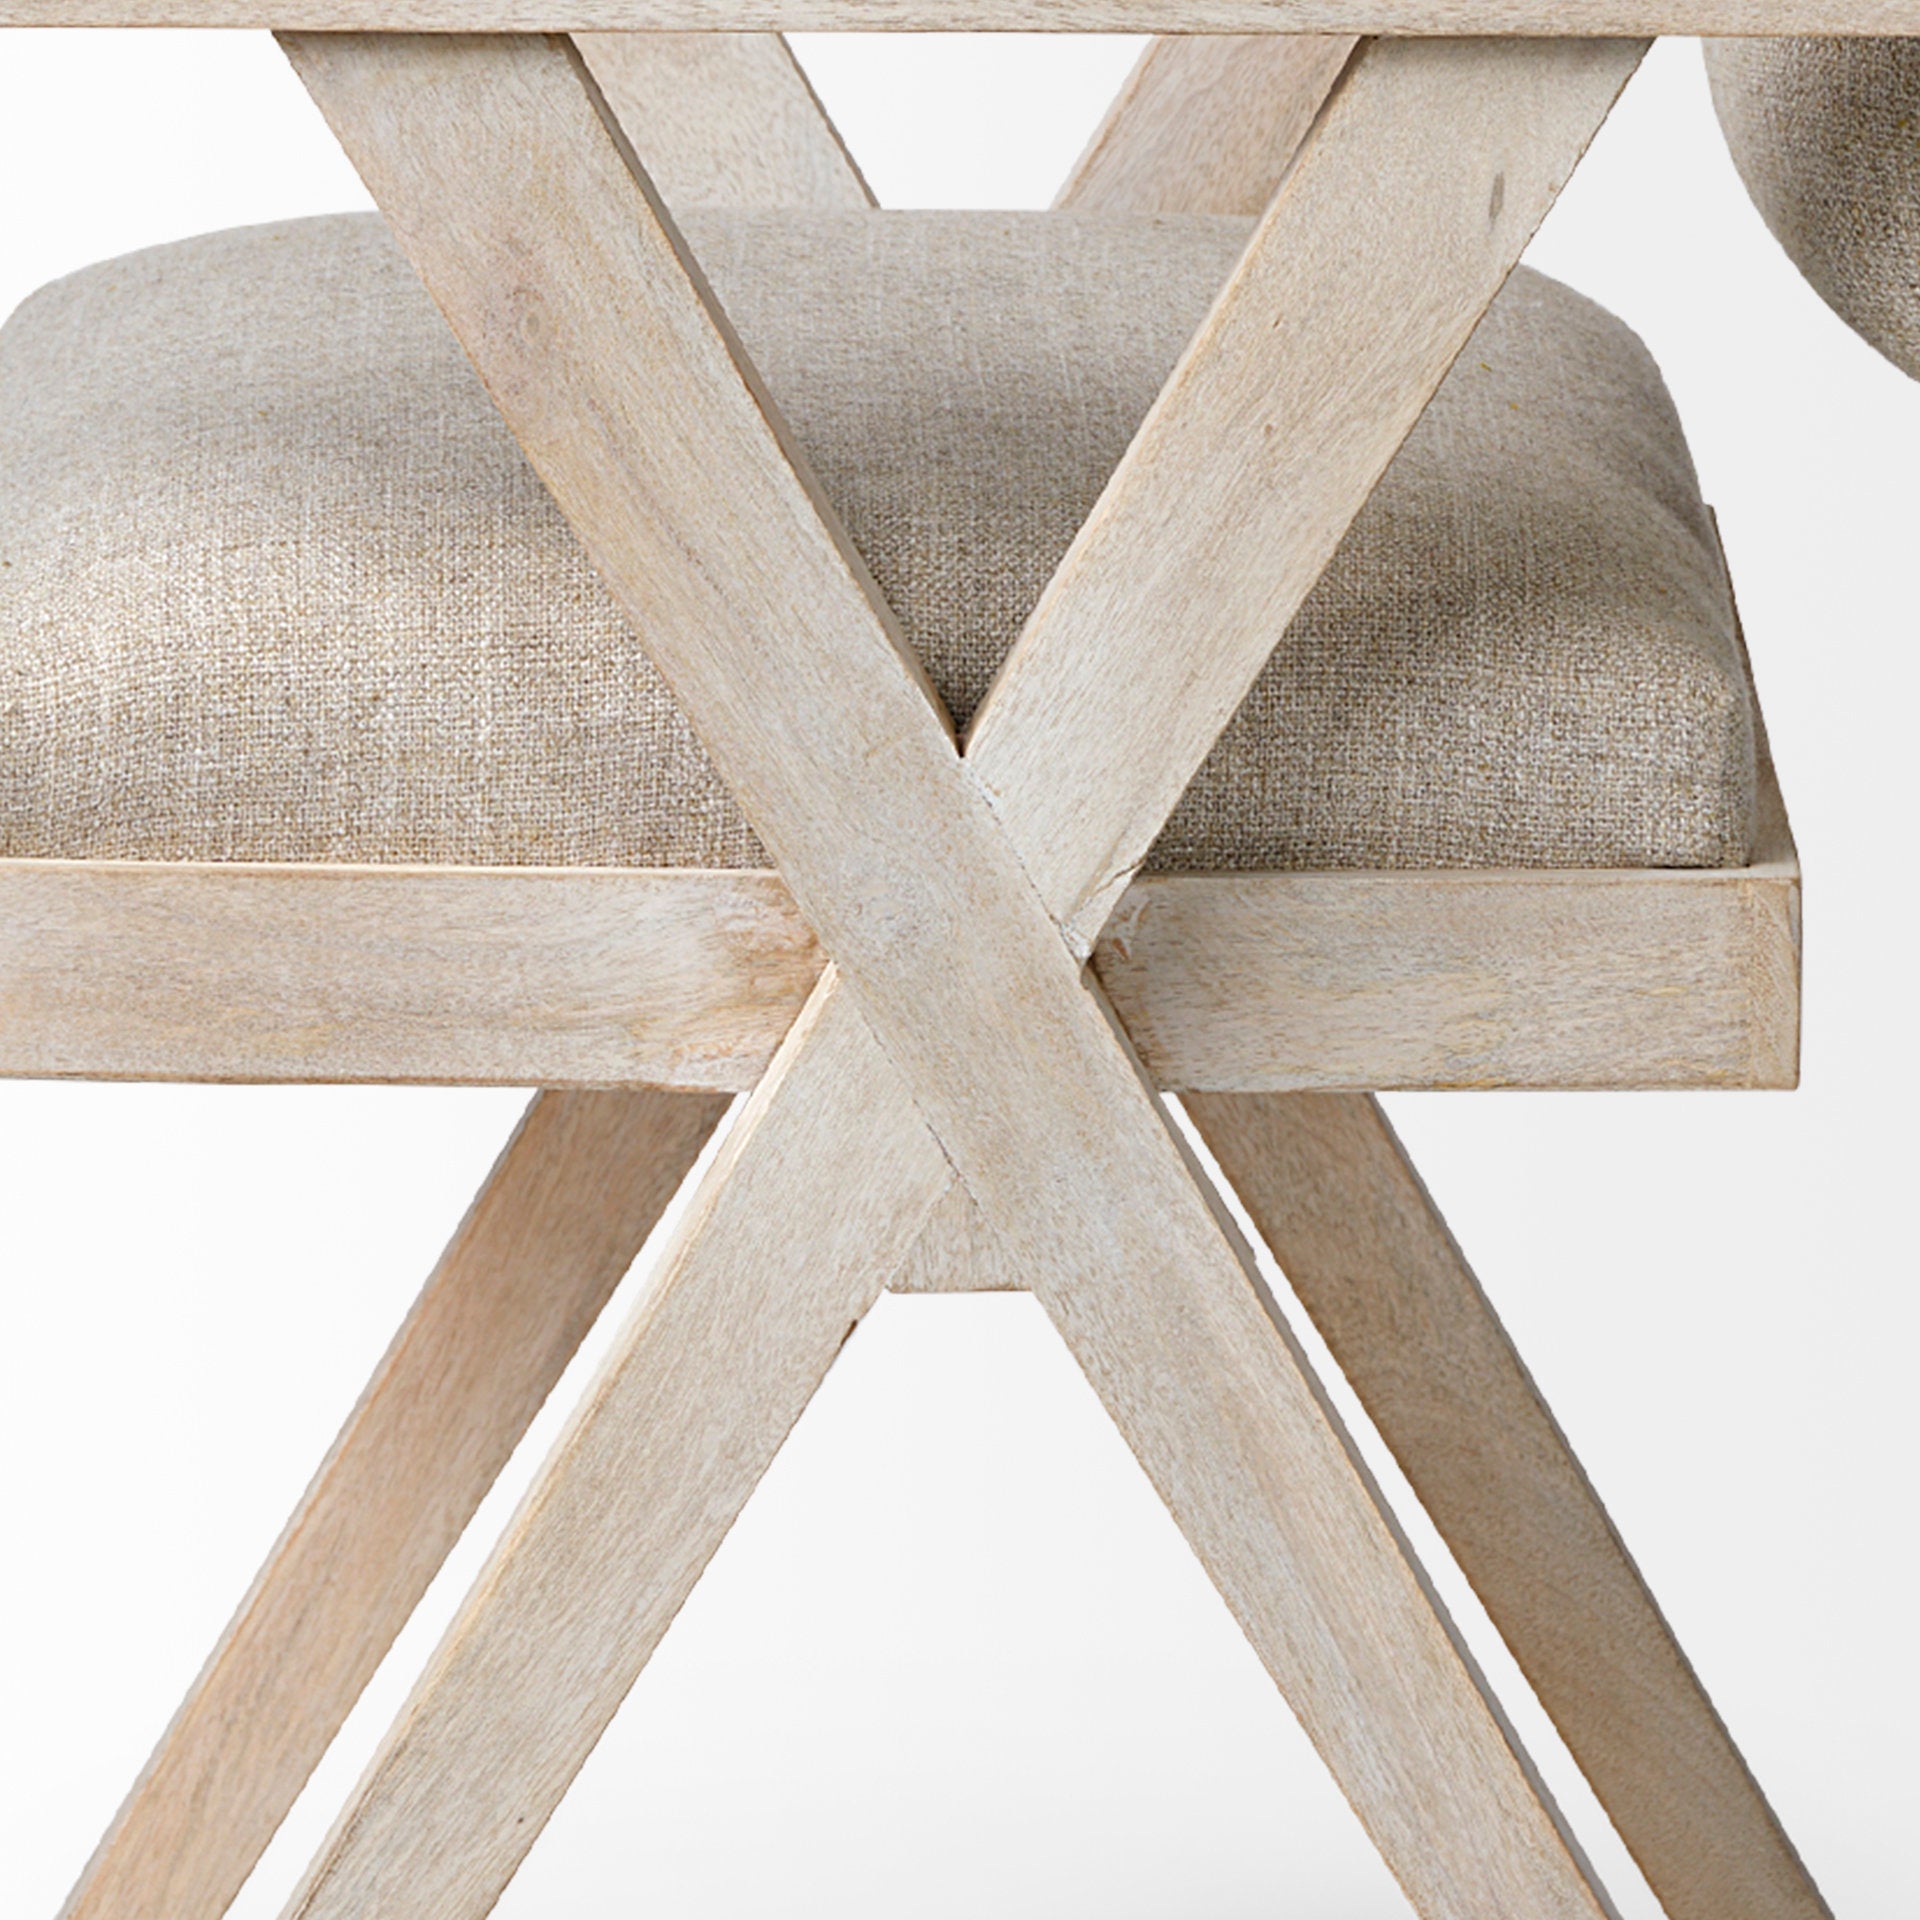 Topanga Dining Chair - Blonde Wood